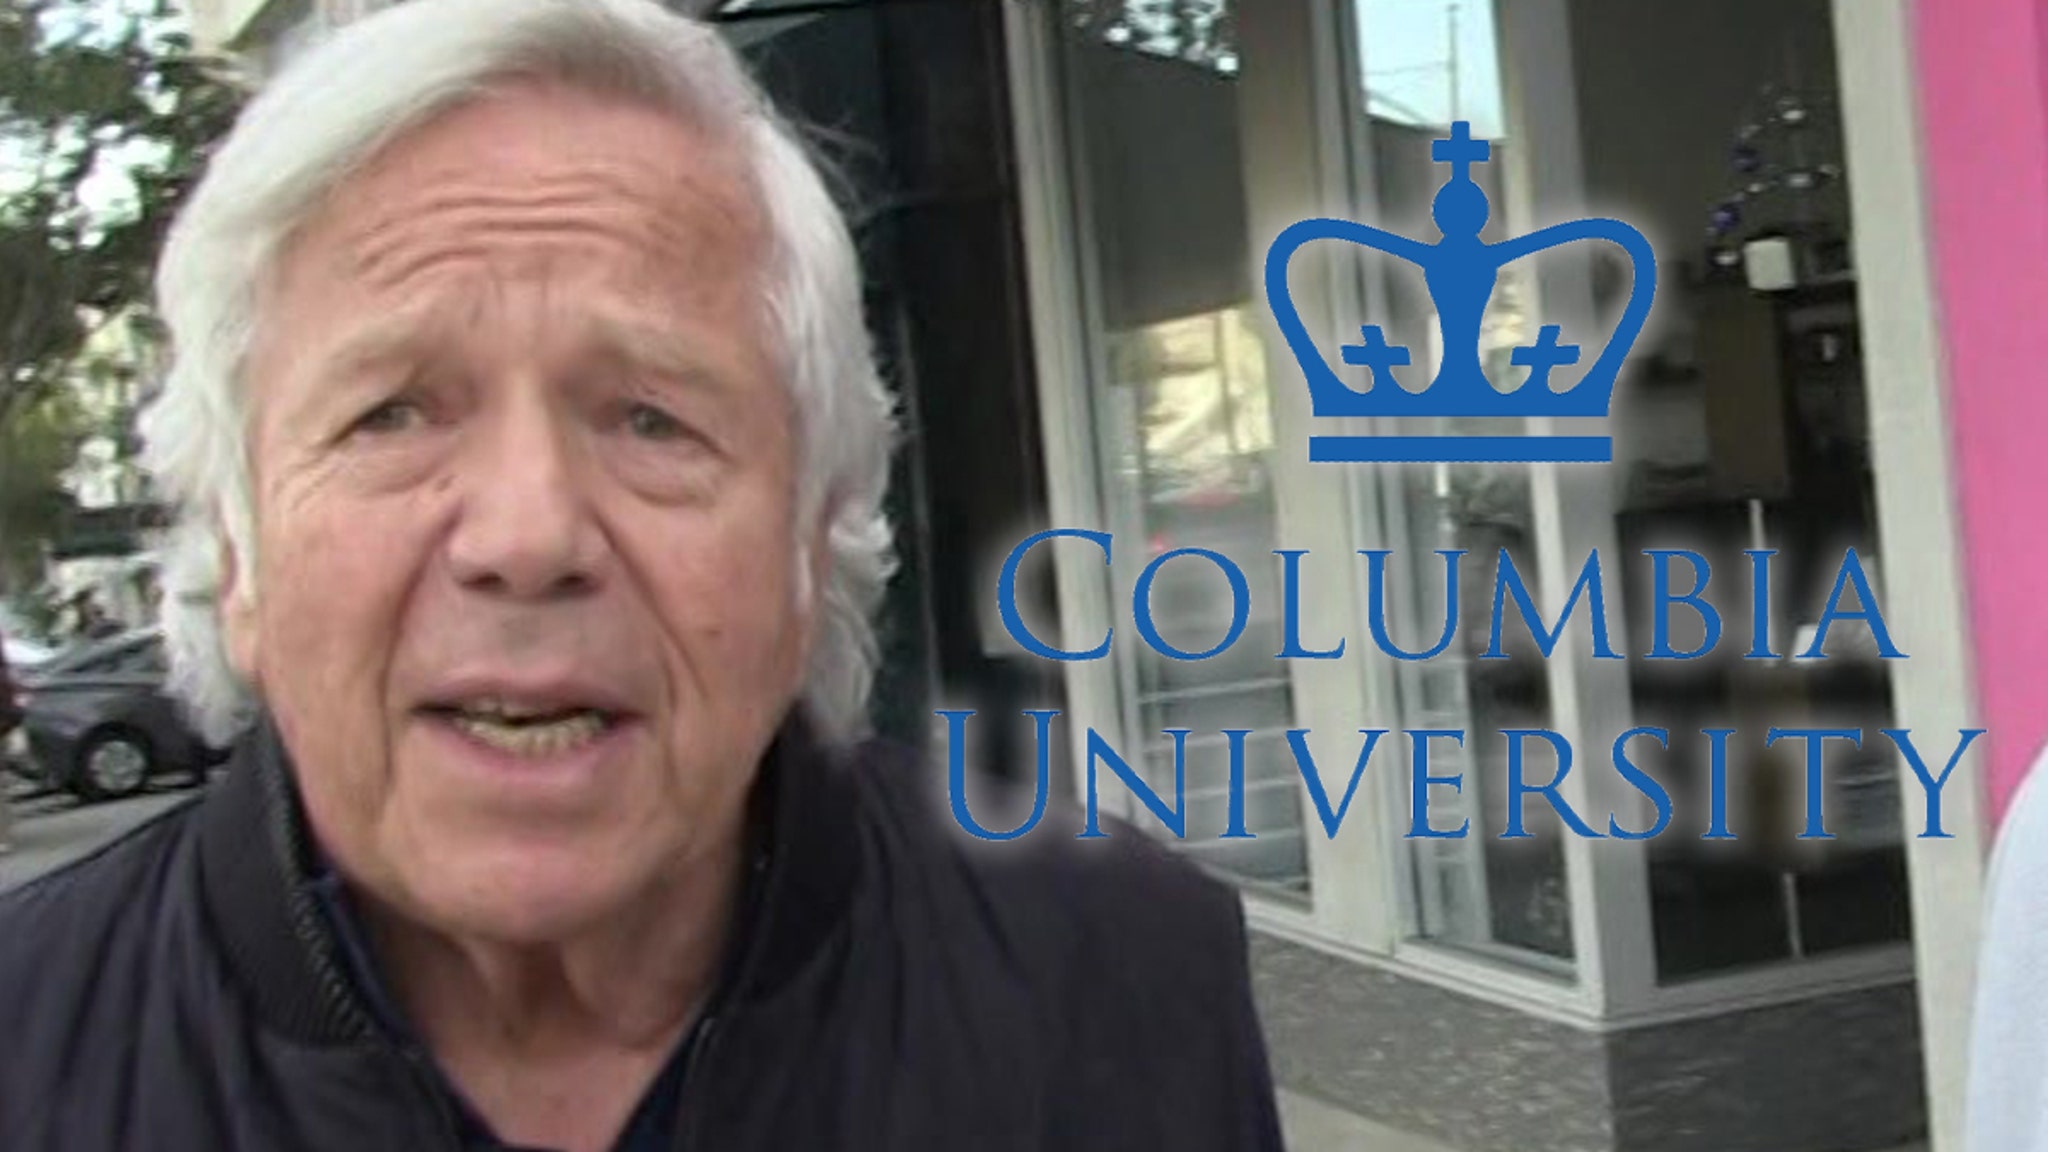 Robert Kraft ‘Deeply Saddened’ Over Columbia, University Unrecognizable